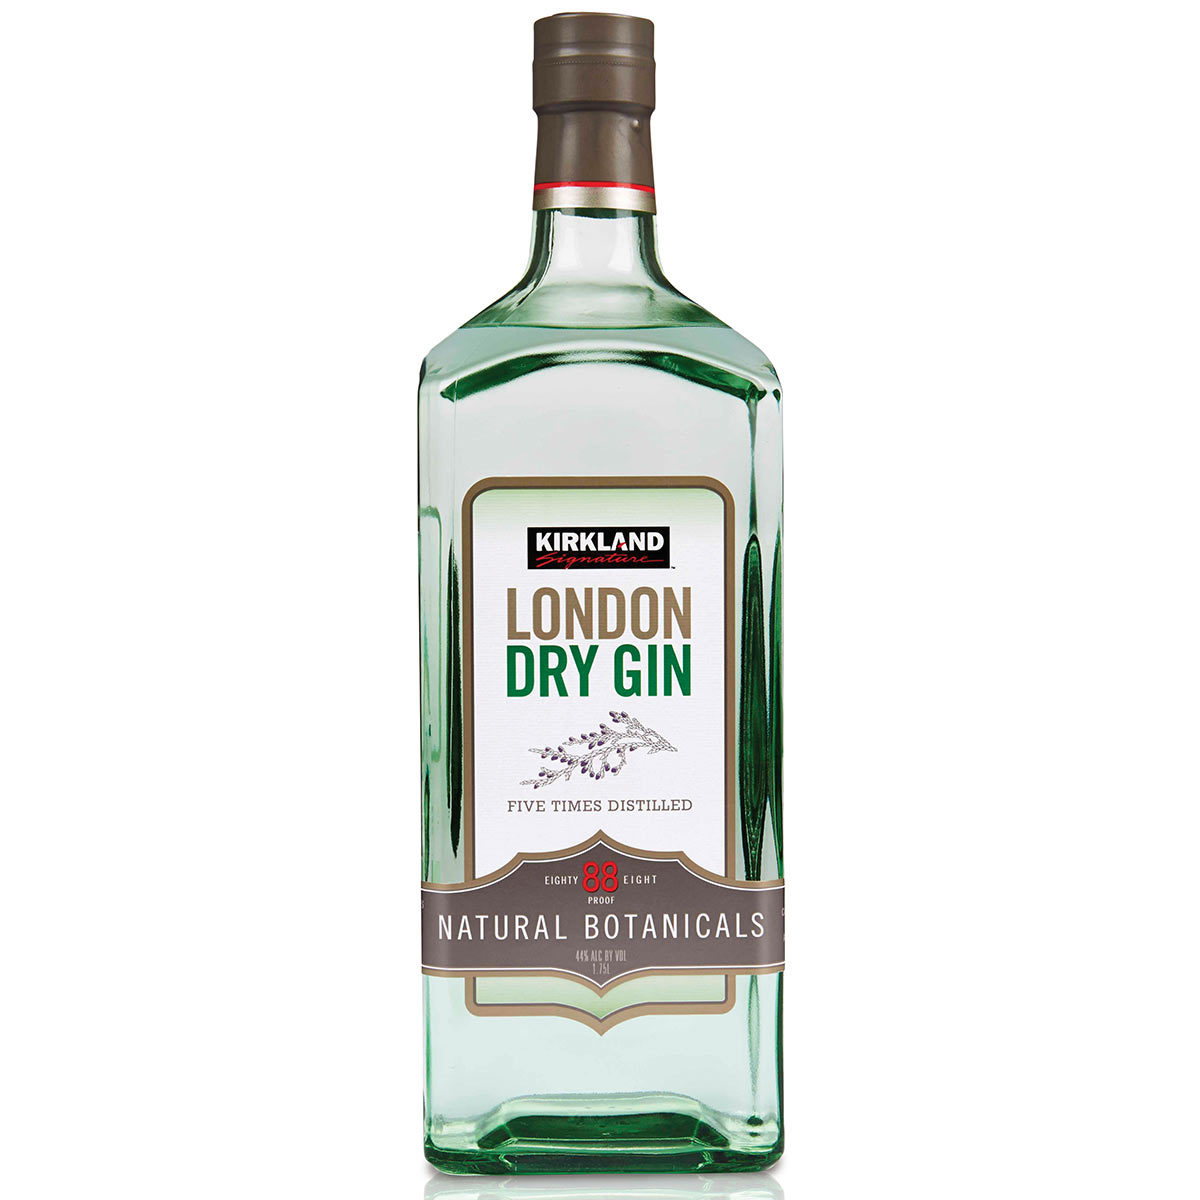 Kirkland London Dry Gin